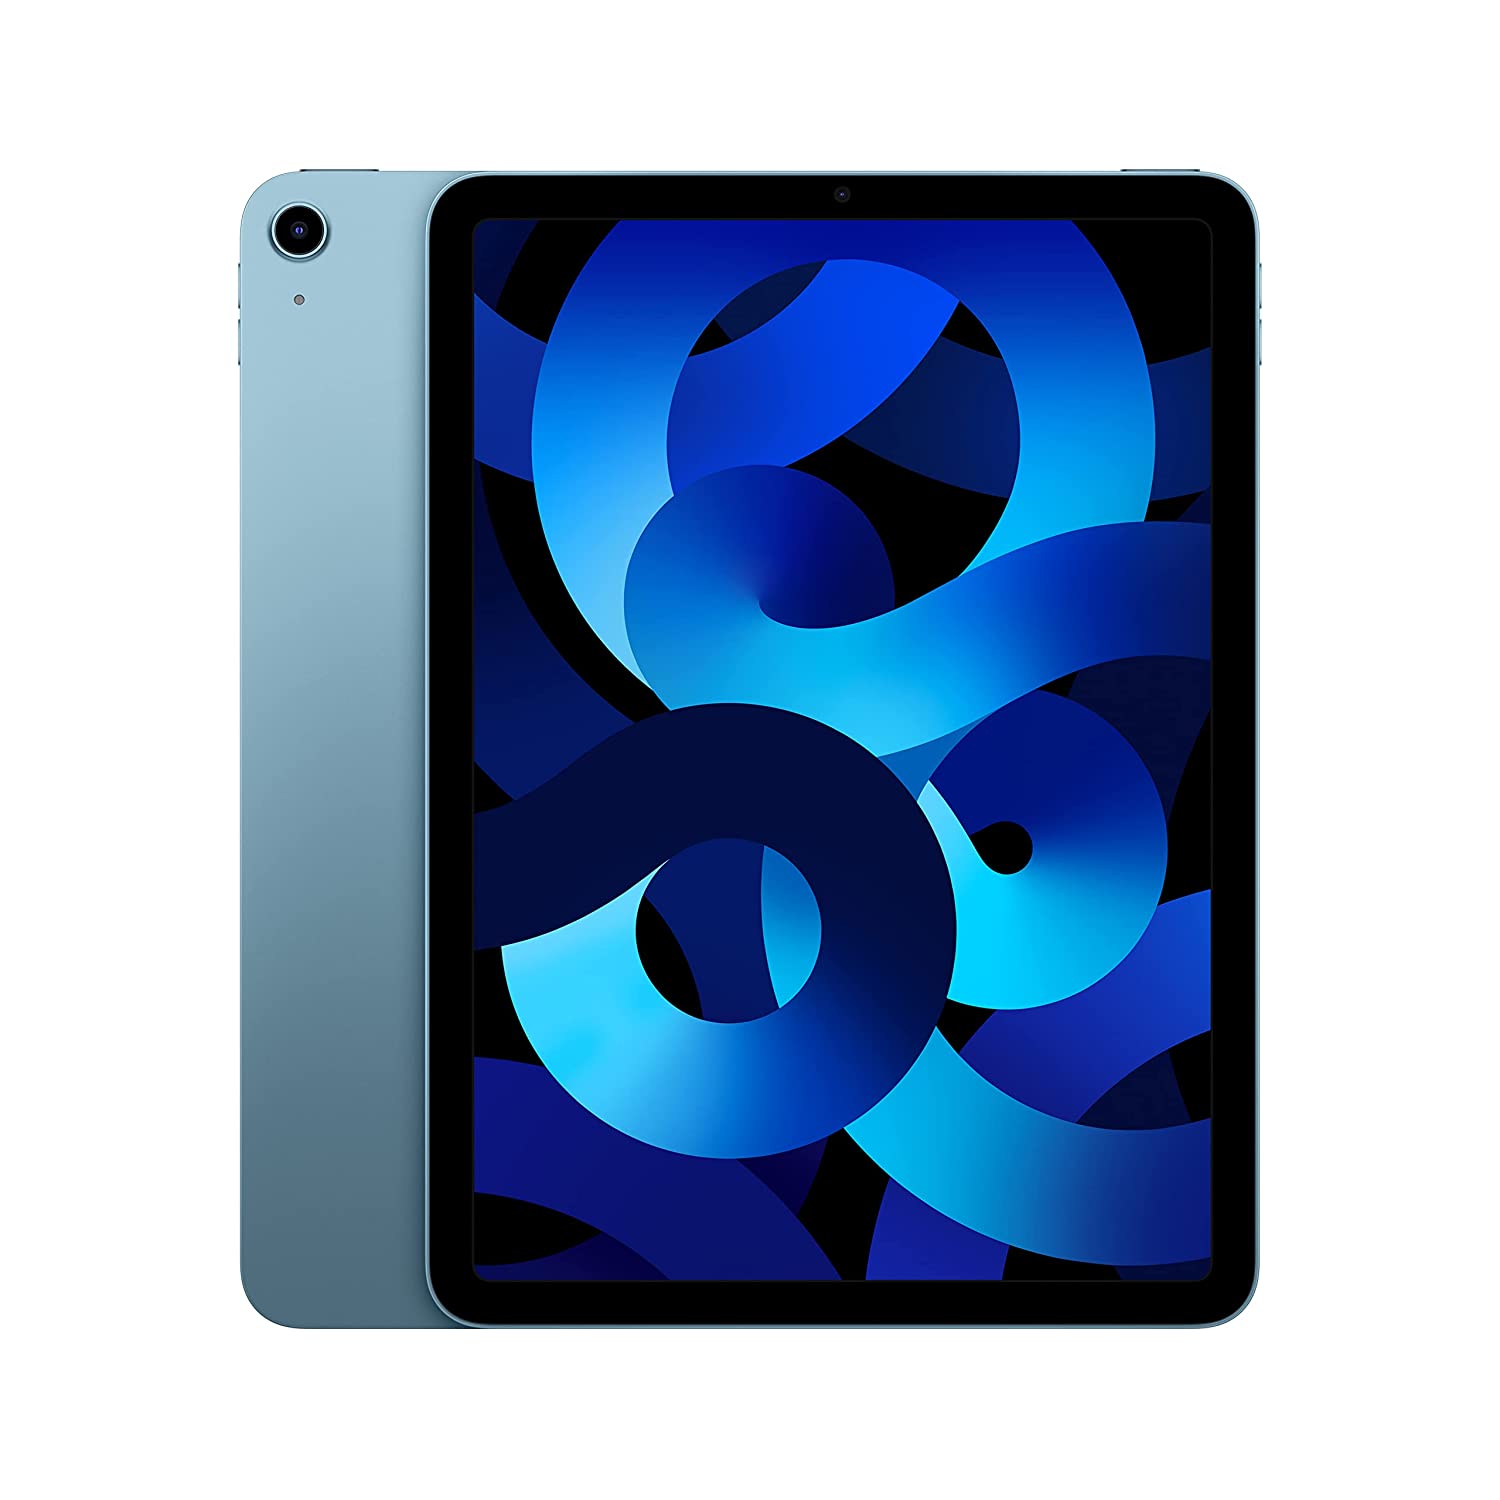 2022 Apple iPad Air (10.9-inch, Wi-Fi + Cellular, 64GB) - Pink (Renewed)